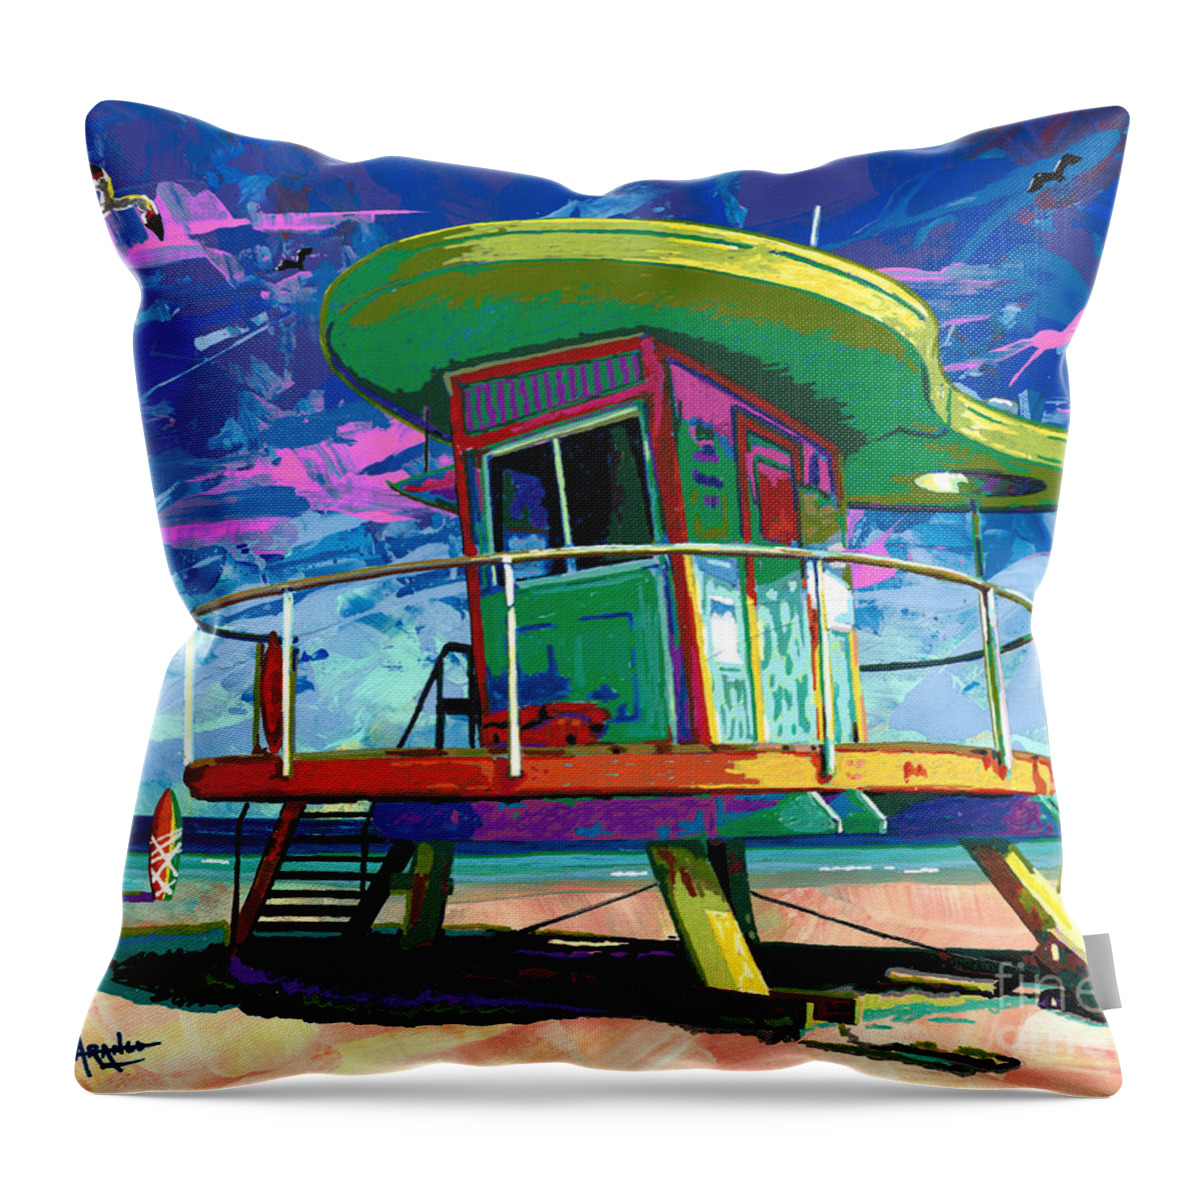 Lifeguard Throw Pillow featuring the painting Miami Beach Lifeguard Tower by Maria Arango